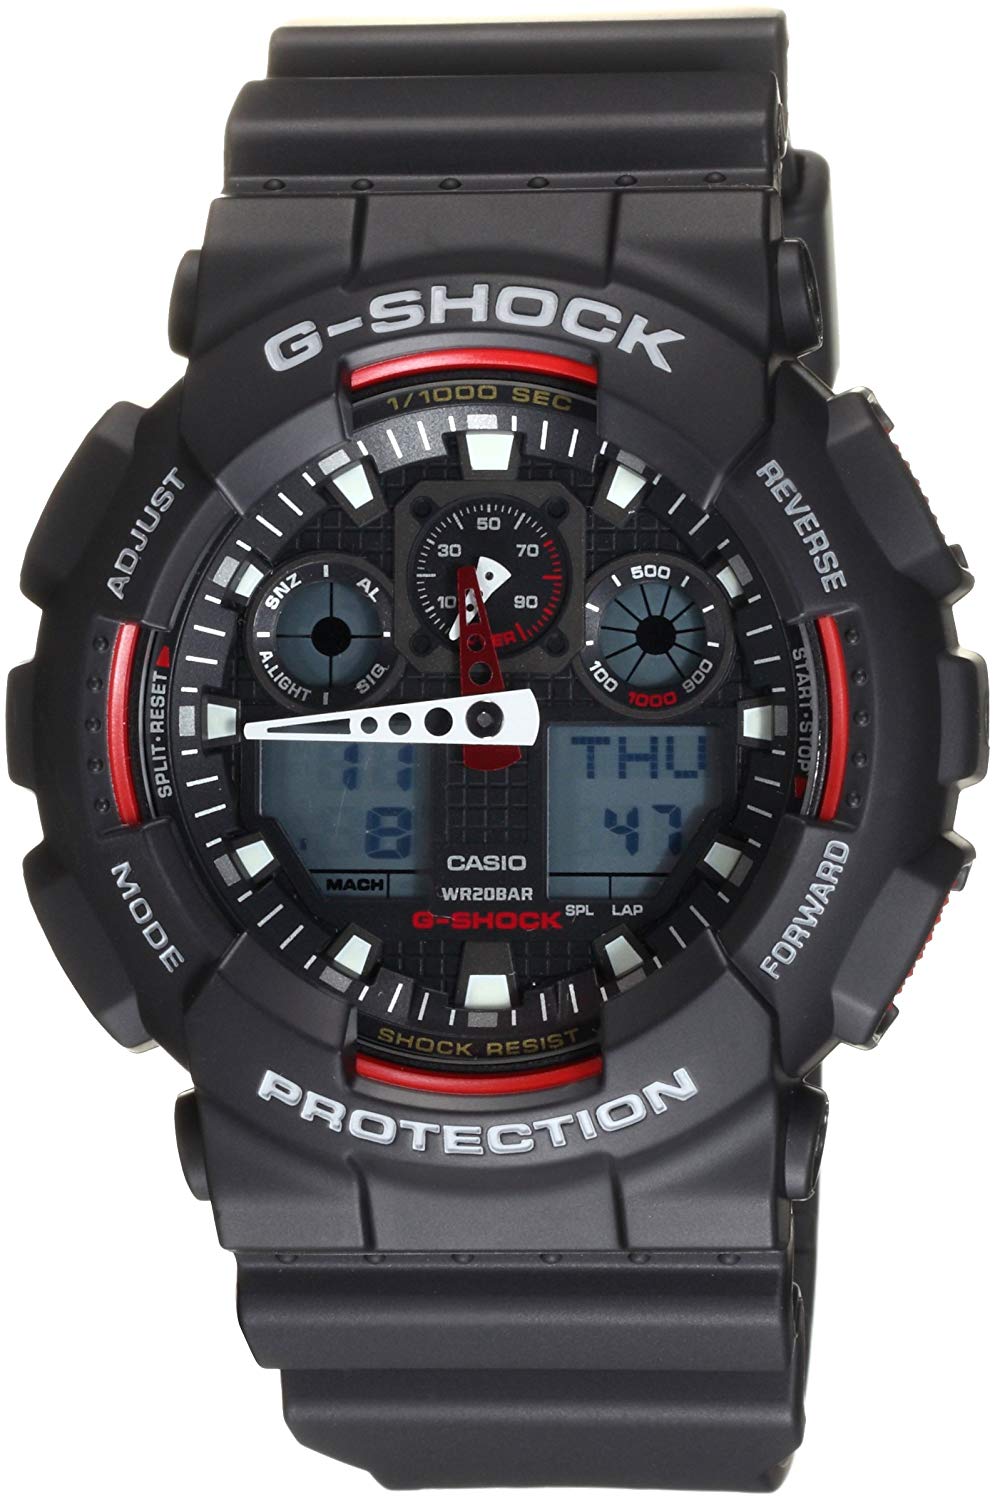 Casio Men's GA-100-1A4 "G-Shock" Sport Watch